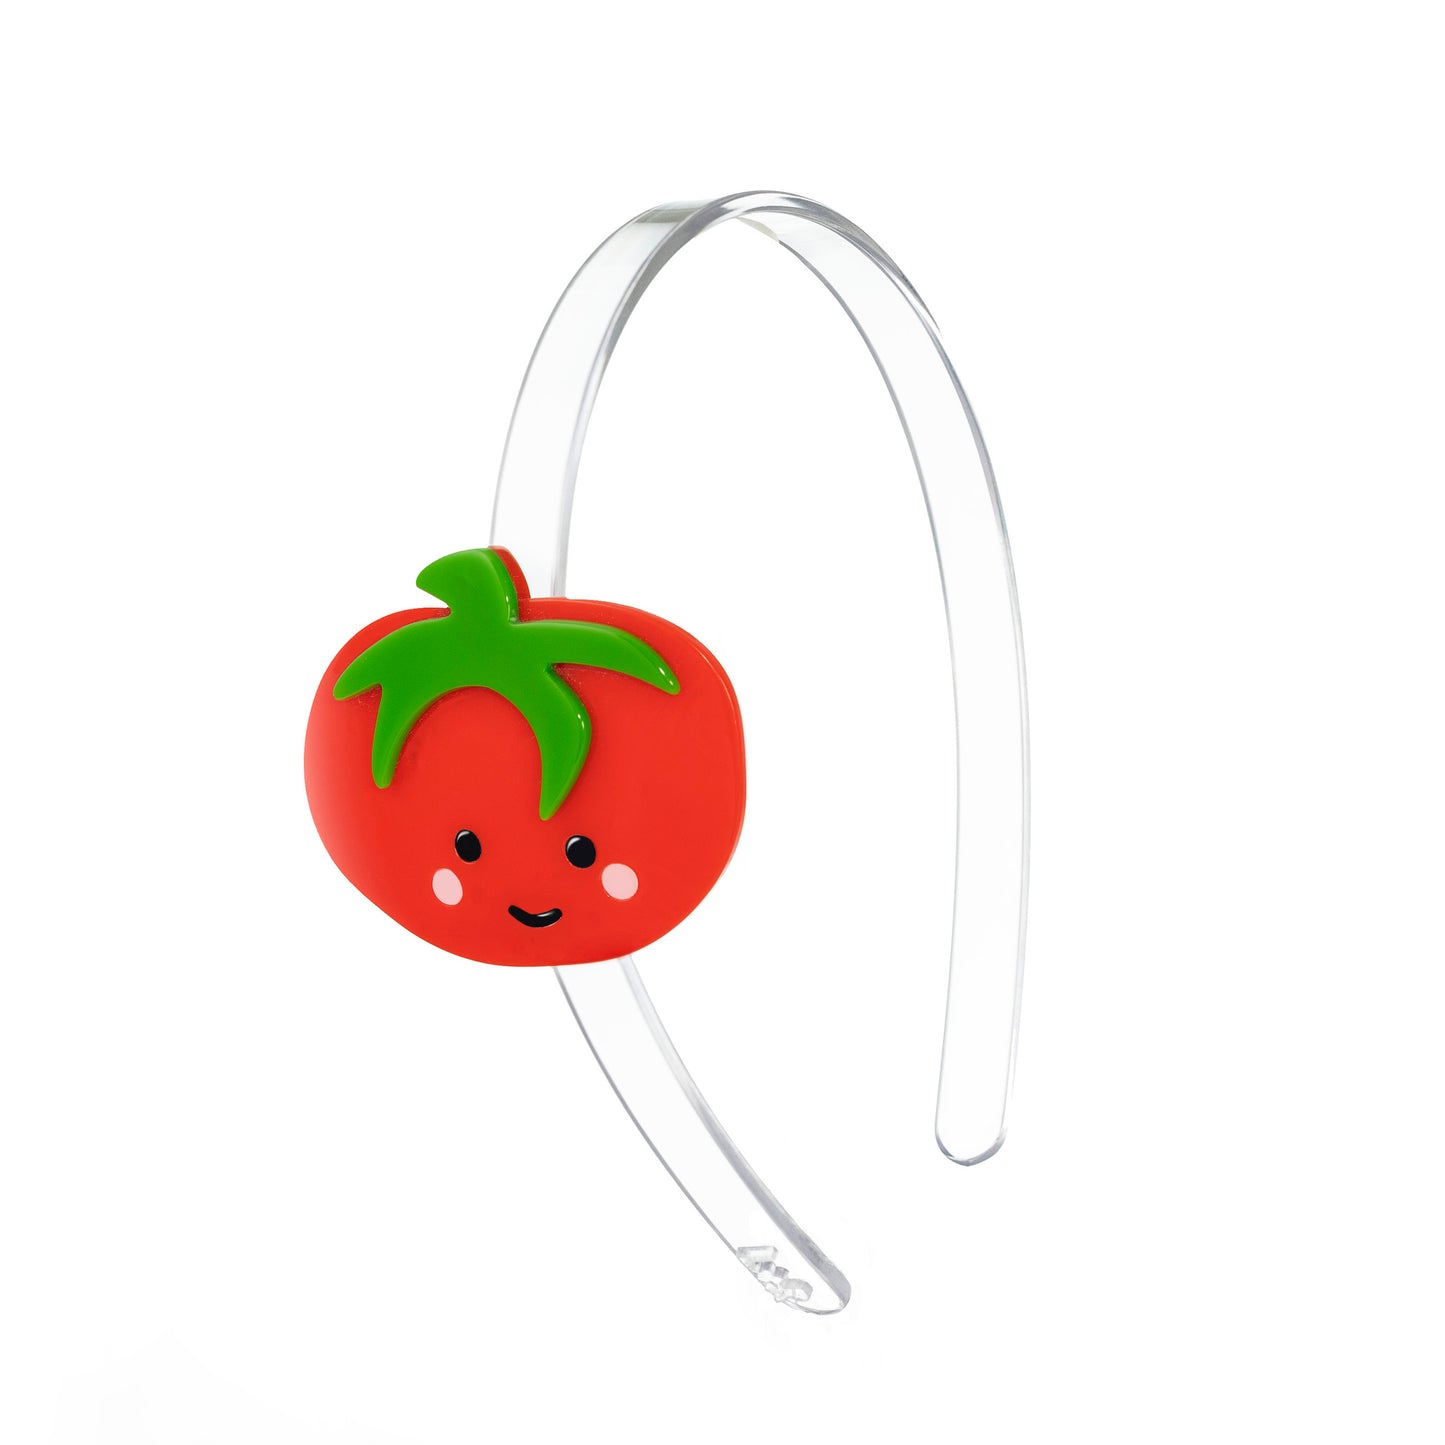 Juicy Red Tomato Headband